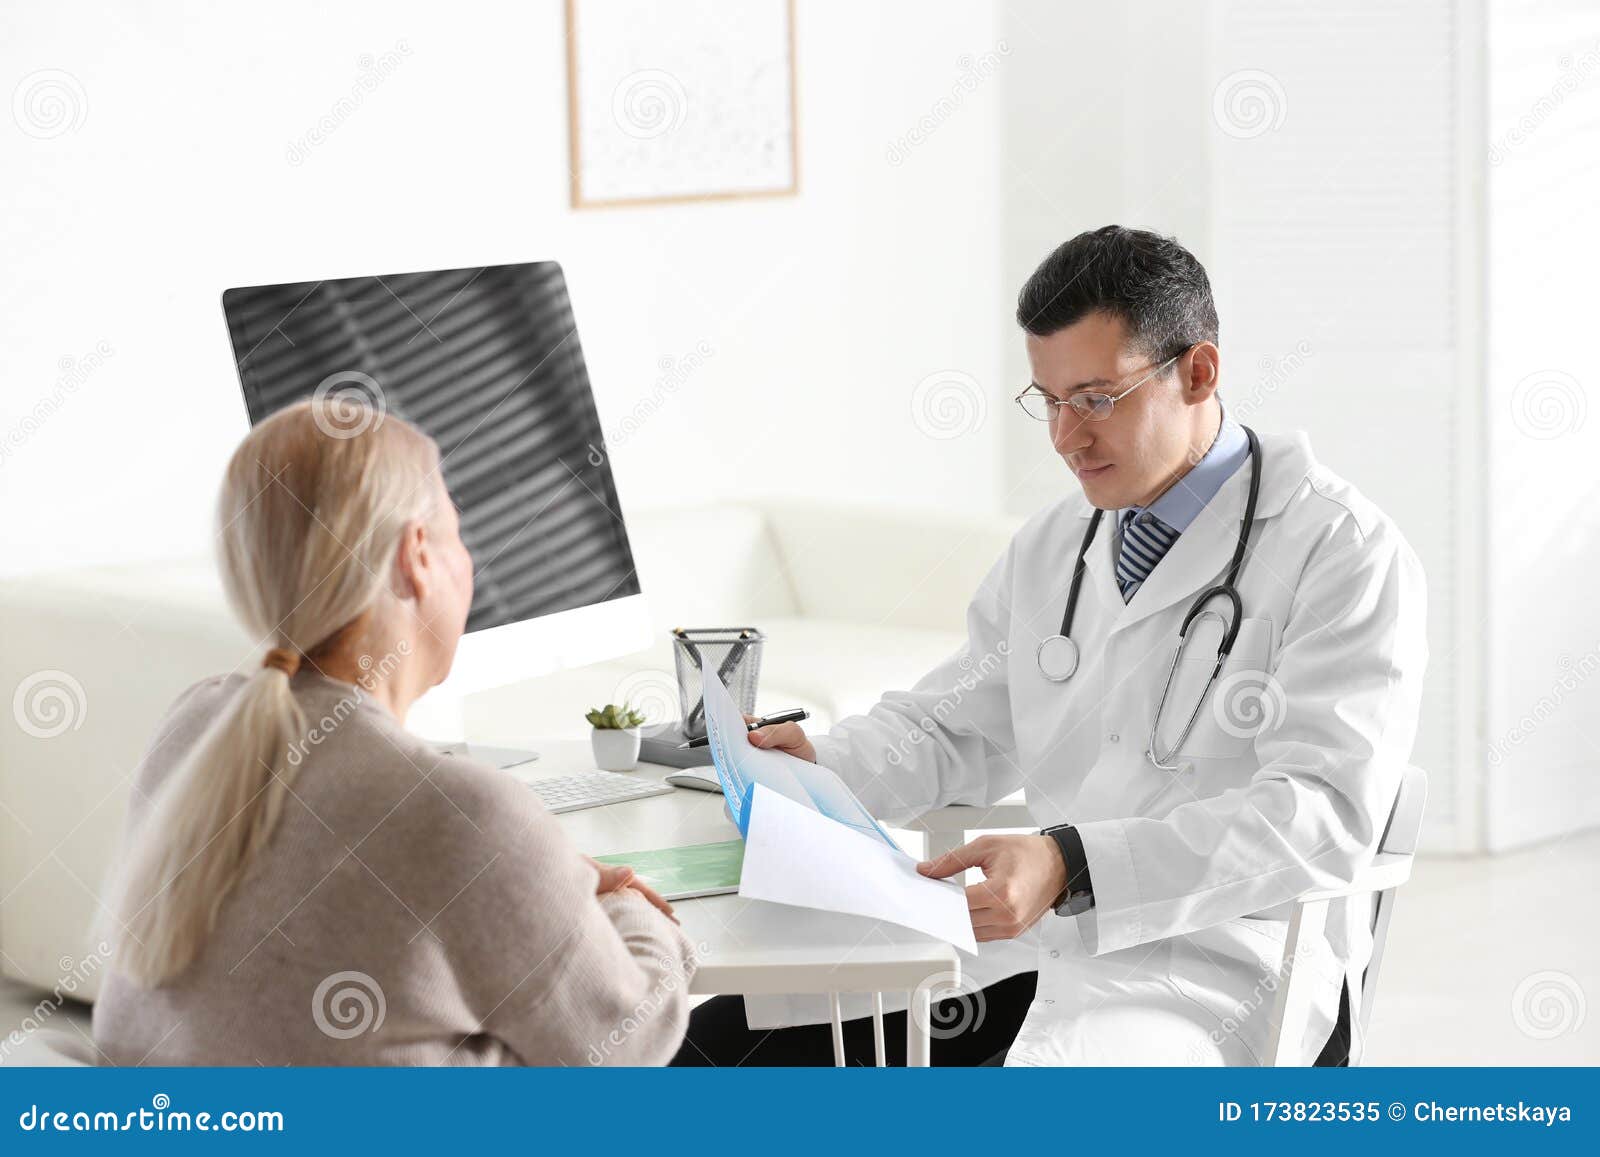 Гепатит врач отзывы. Пациент на приеме у врача с гепатитом с. Врач инфекционист картинки. Человек гепатит у врача.